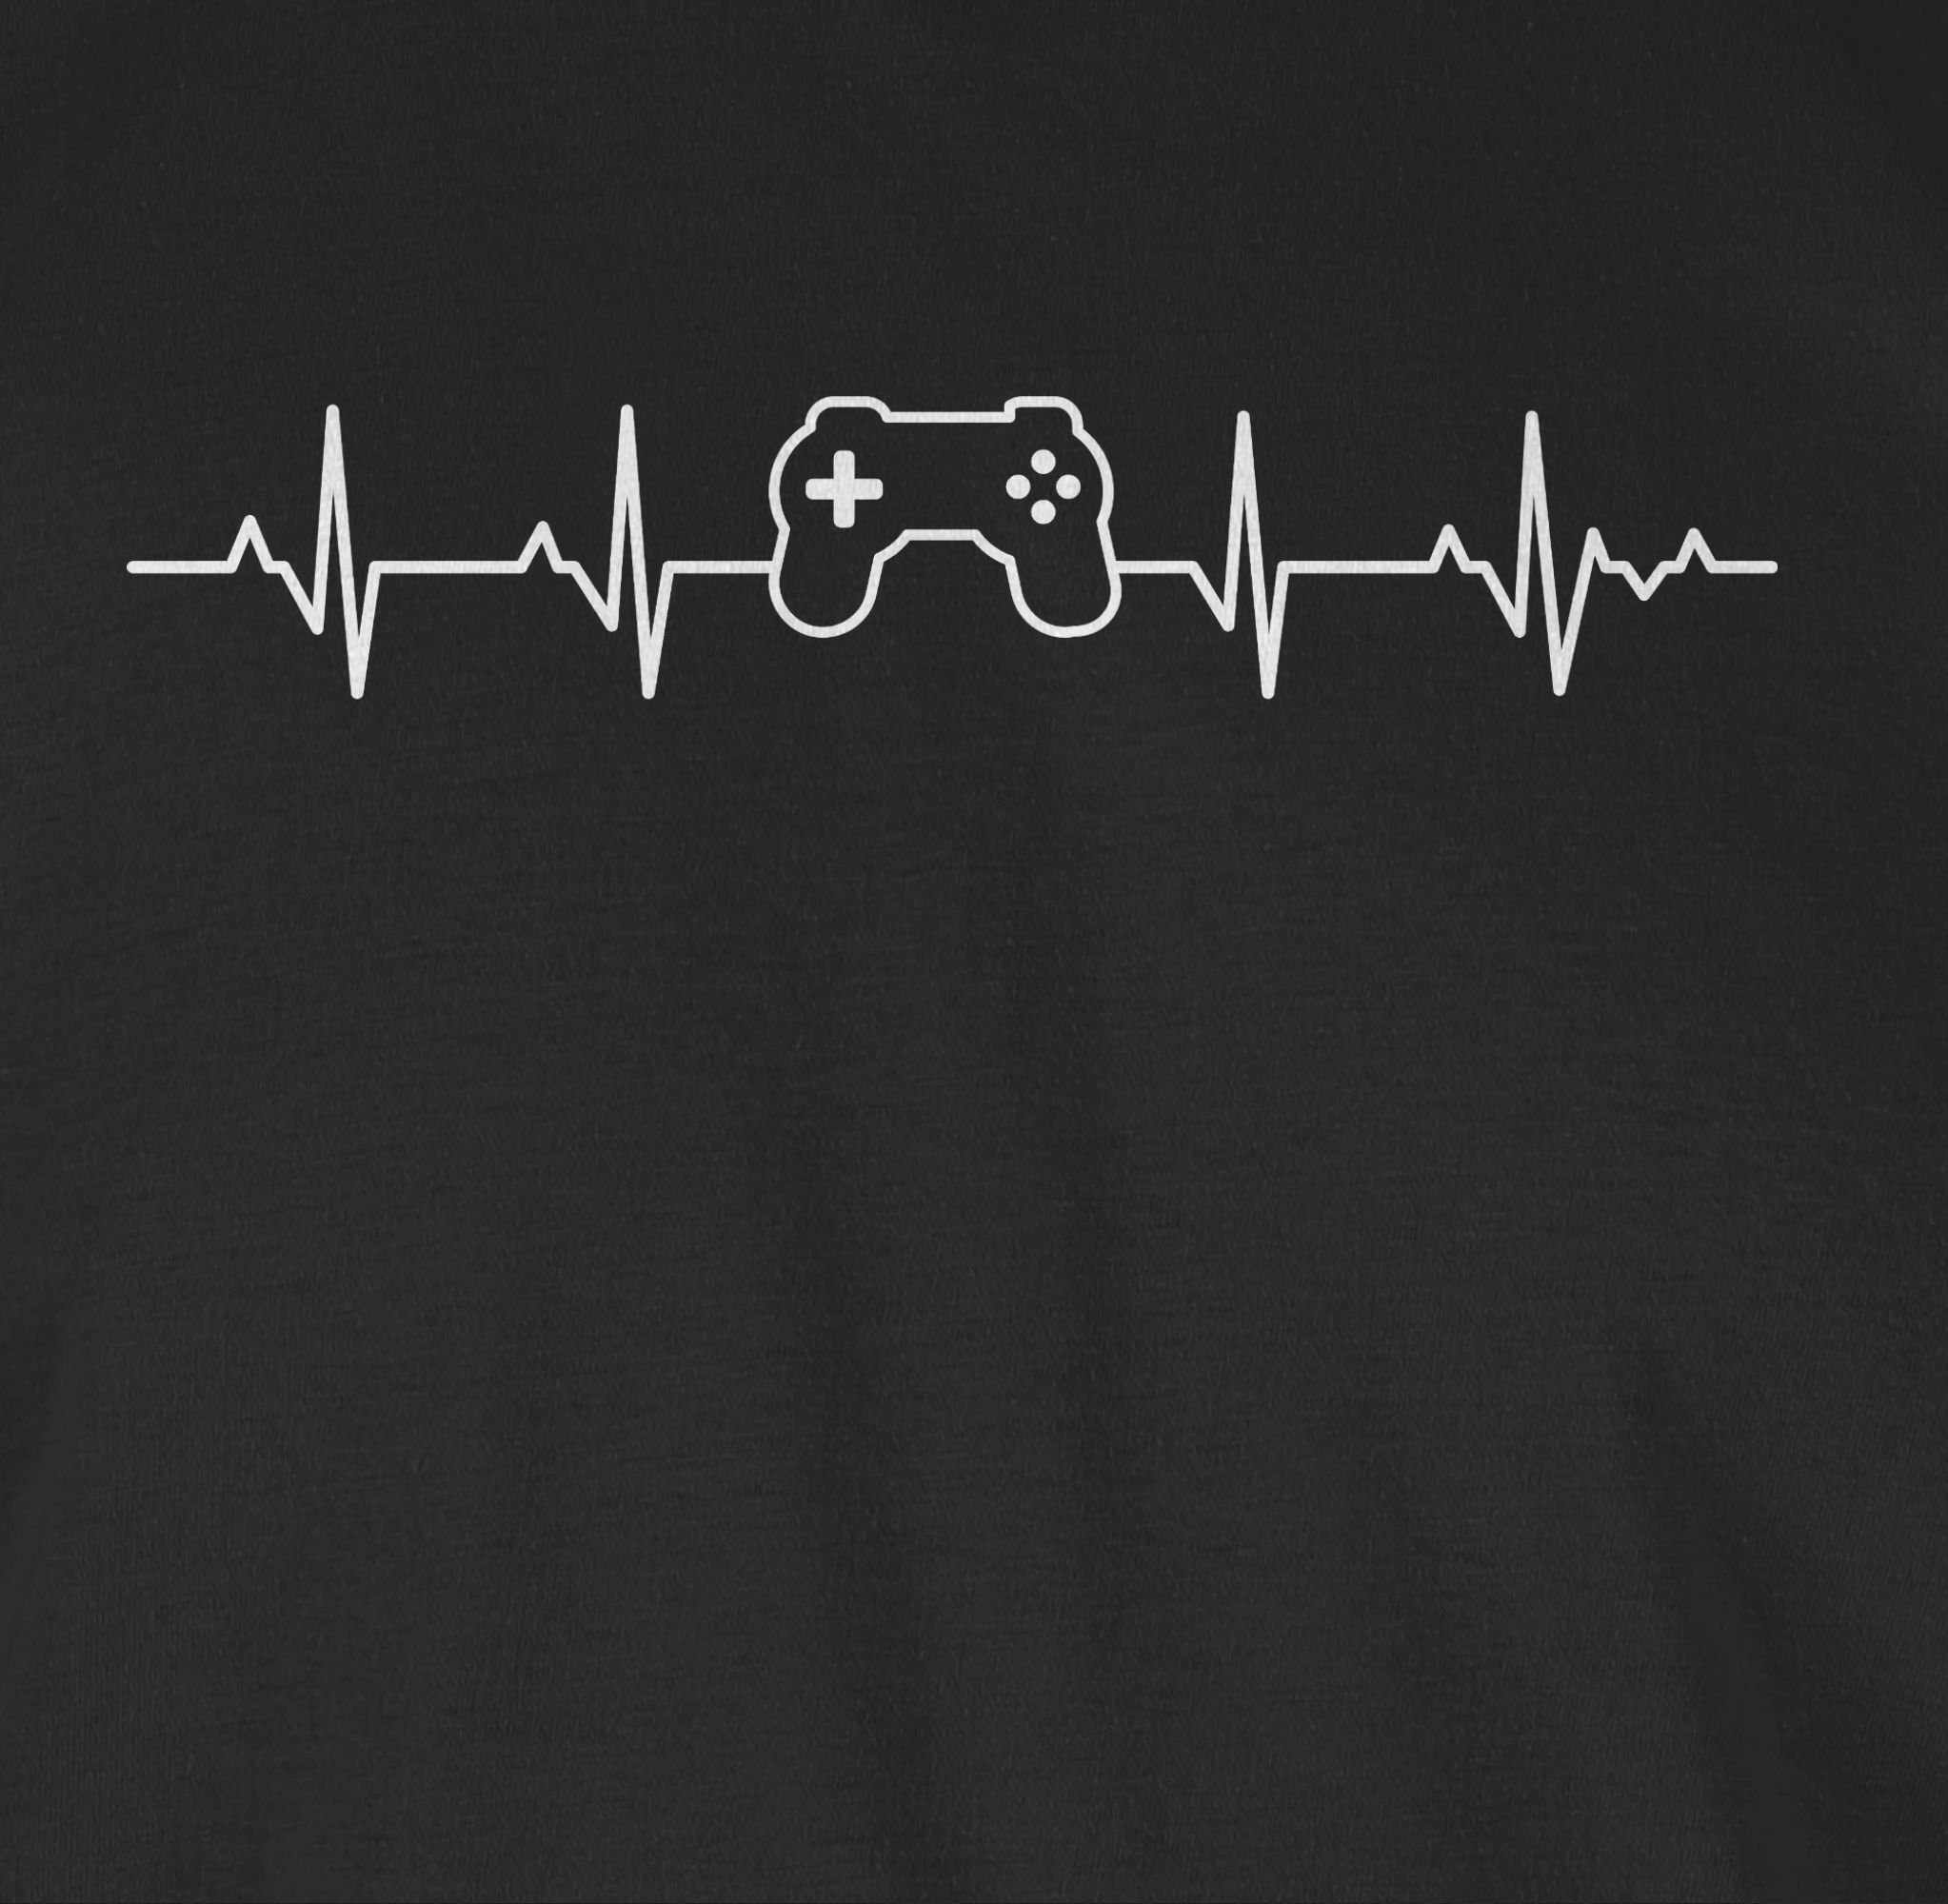 Shirtracer T-Shirt Geschenke Nerd Gaming Herzschlag 01 Controller Schwarz